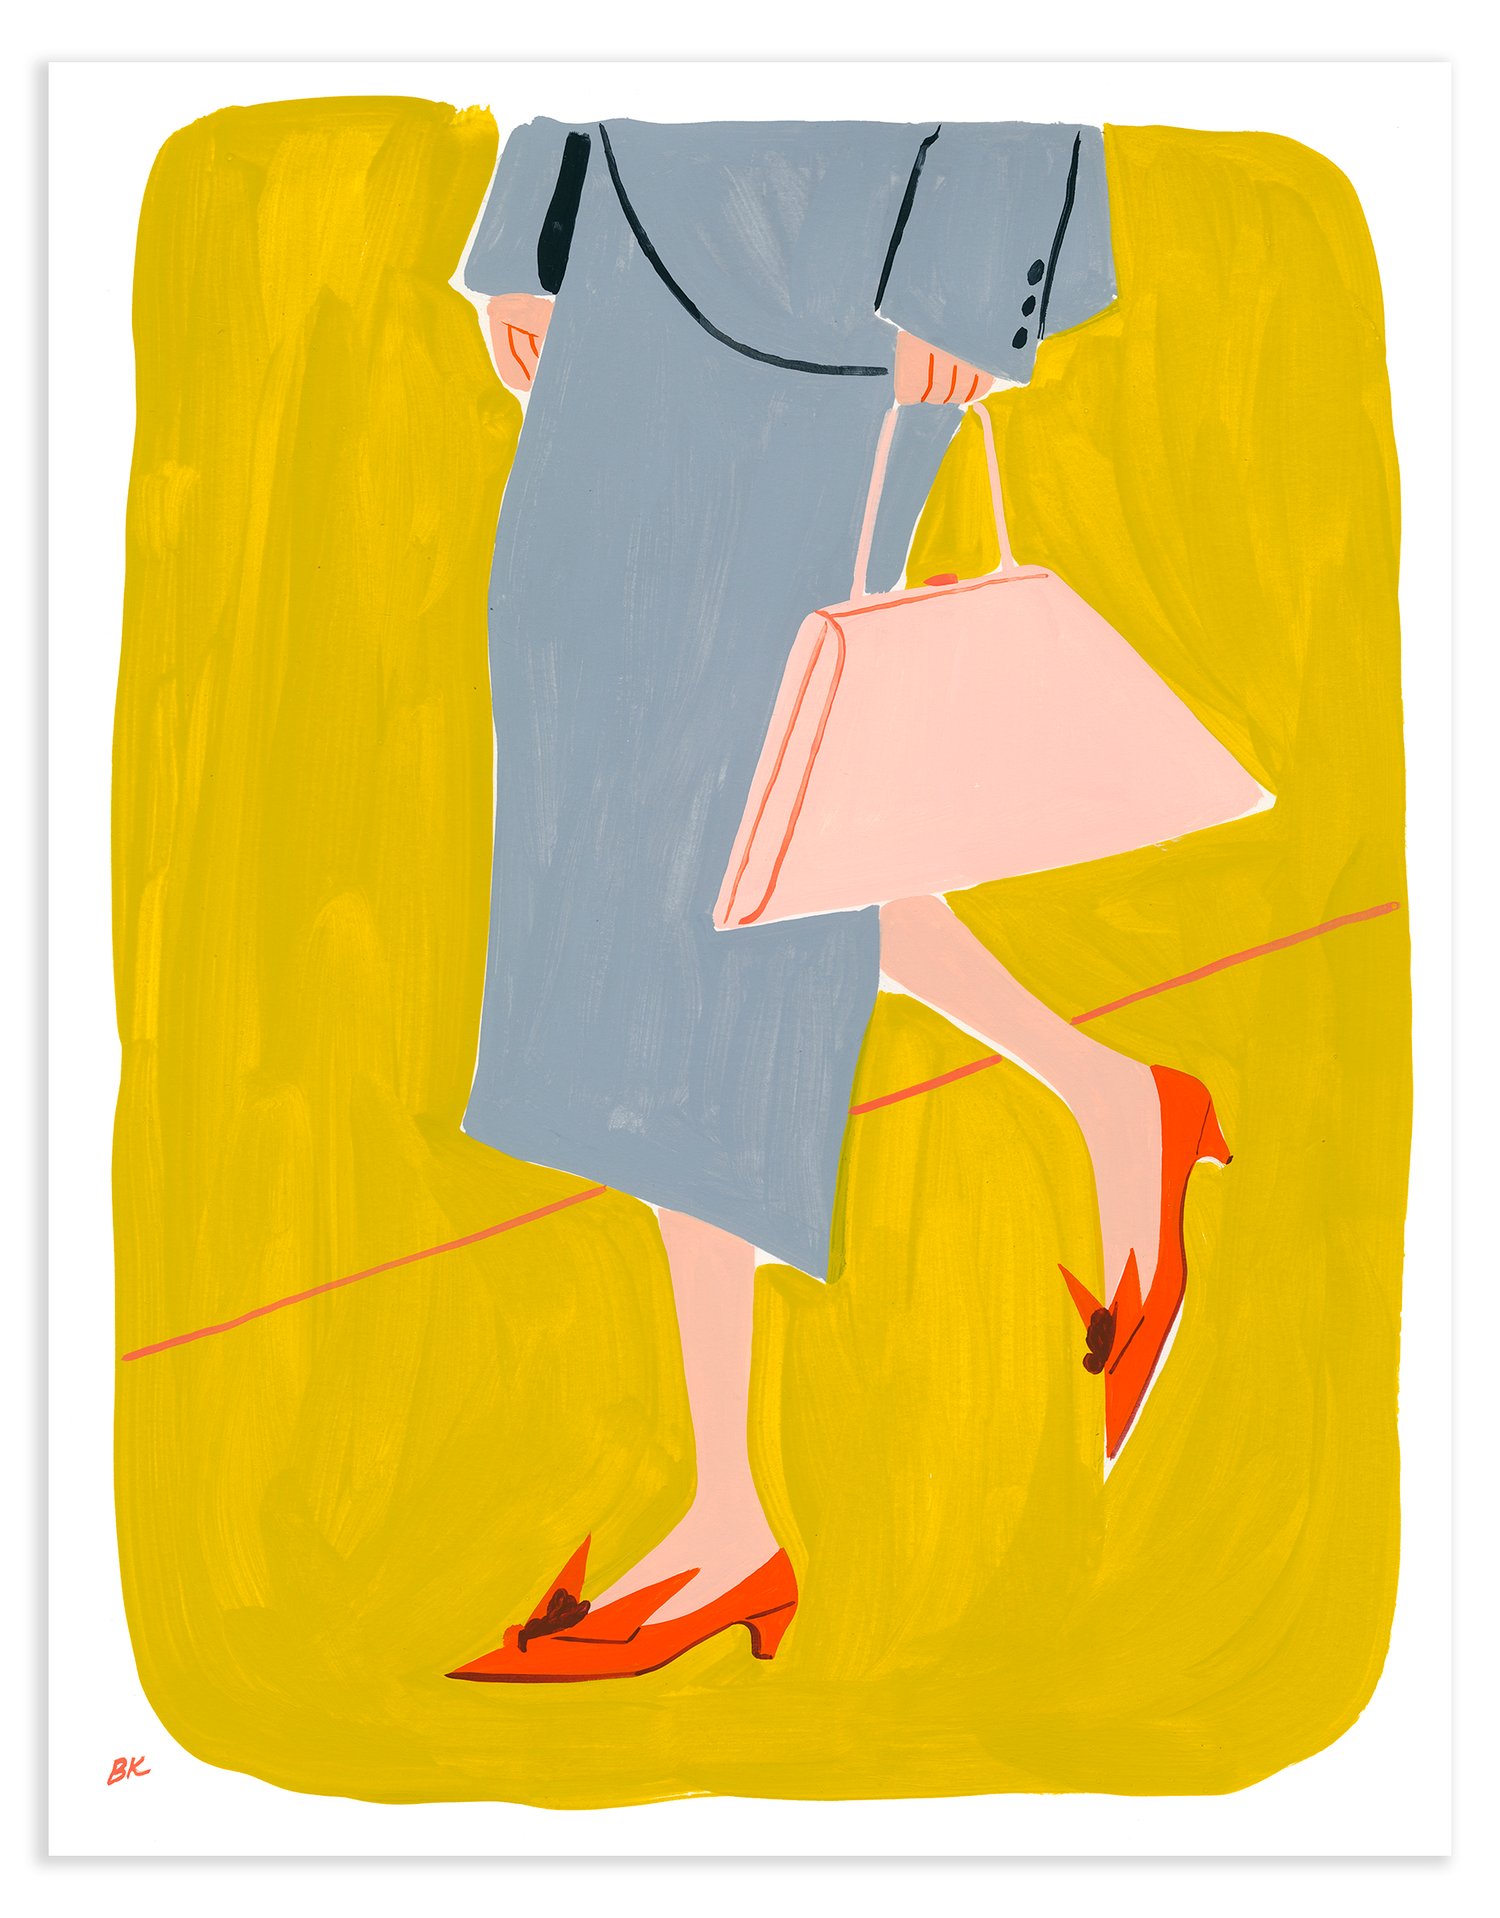 Image of Prada original fashion illustration - Yellow